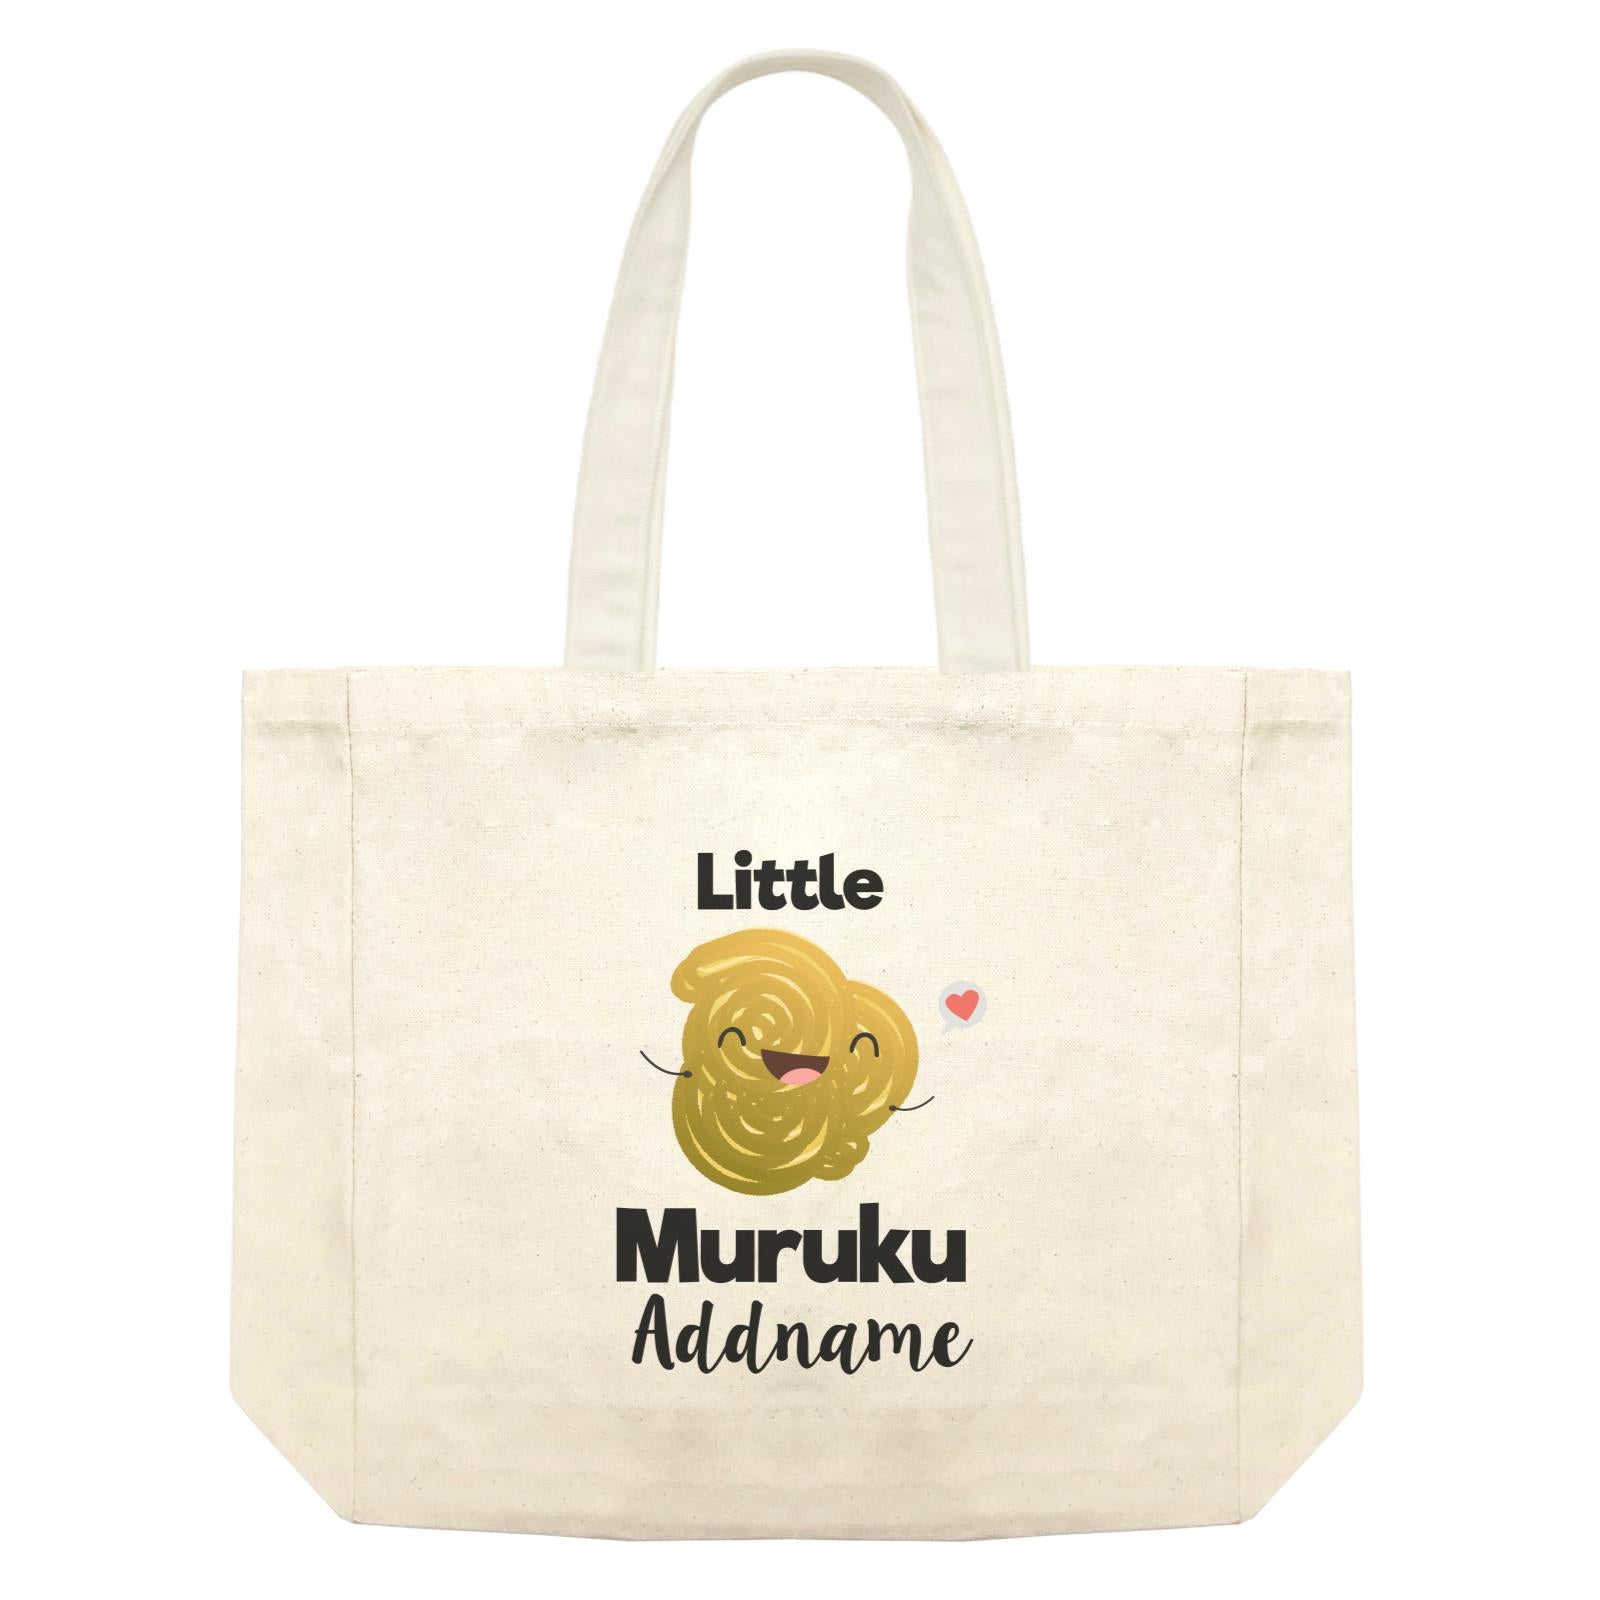 Little Muruku Addname Shopping Bag